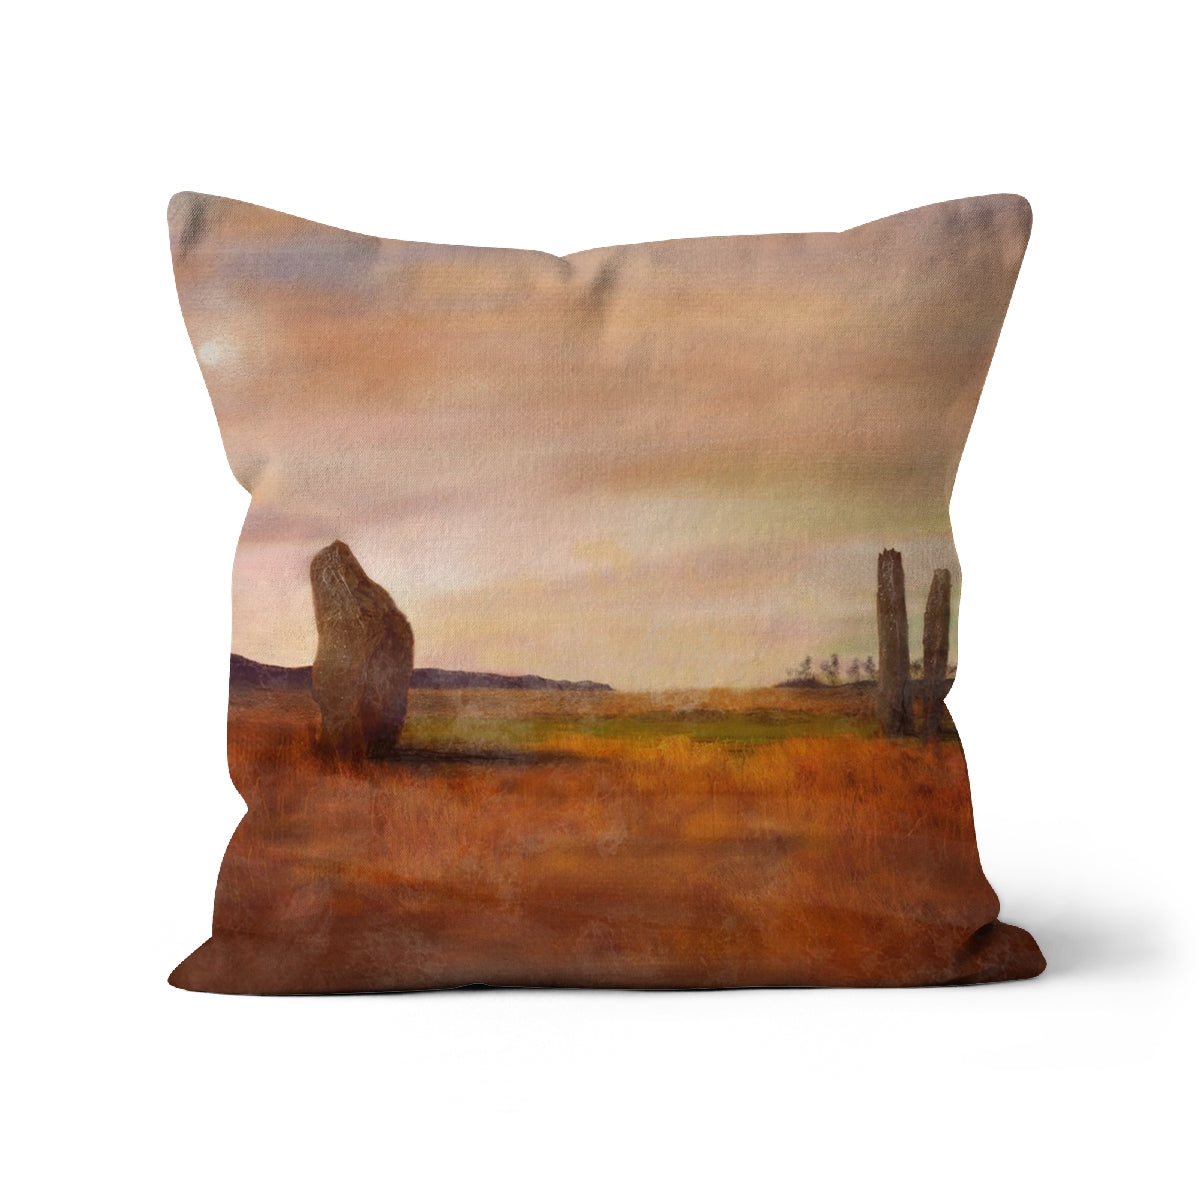 Machrie Moor Arran Art Gifts Cushion-Cushions-Arran Art Gallery-Linen-18"x18"-Paintings, Prints, Homeware, Art Gifts From Scotland By Scottish Artist Kevin Hunter